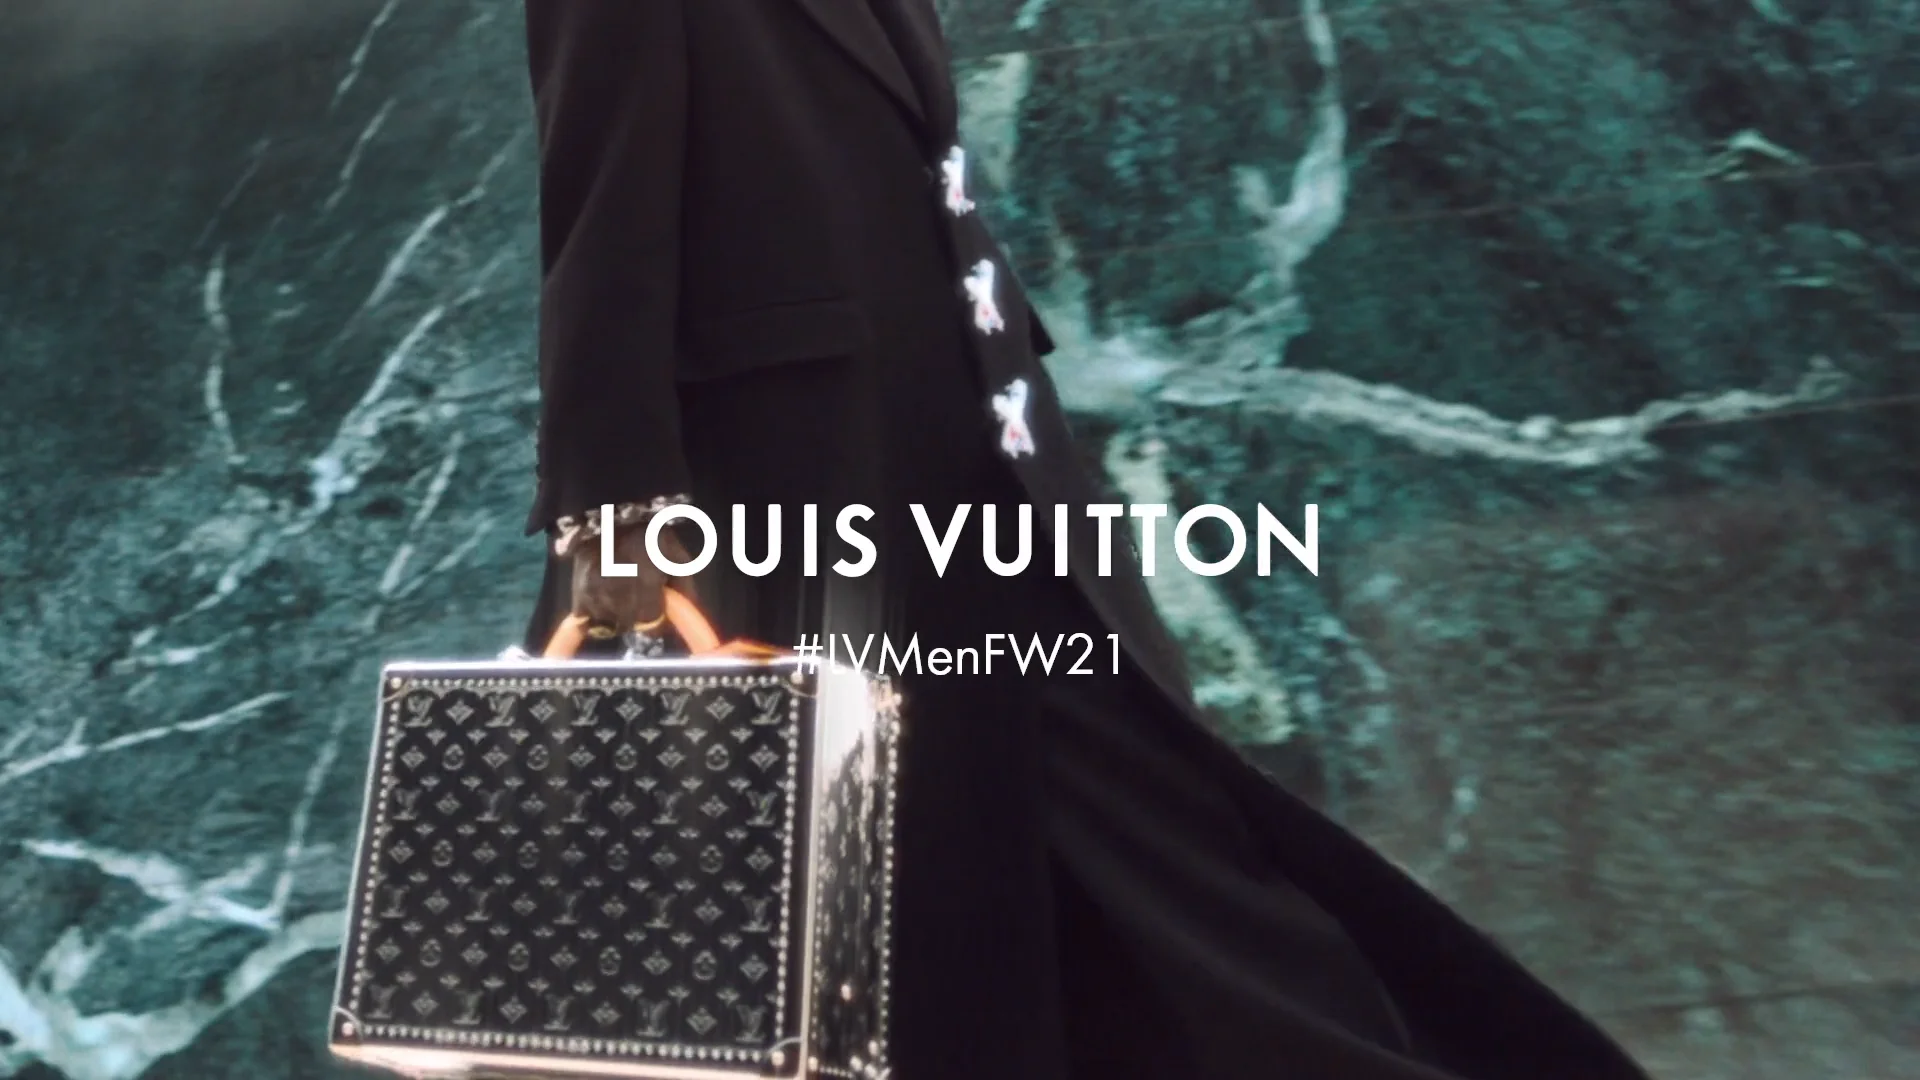 LOUIS VUITTON 2021 Eyewear Campaign on Vimeo